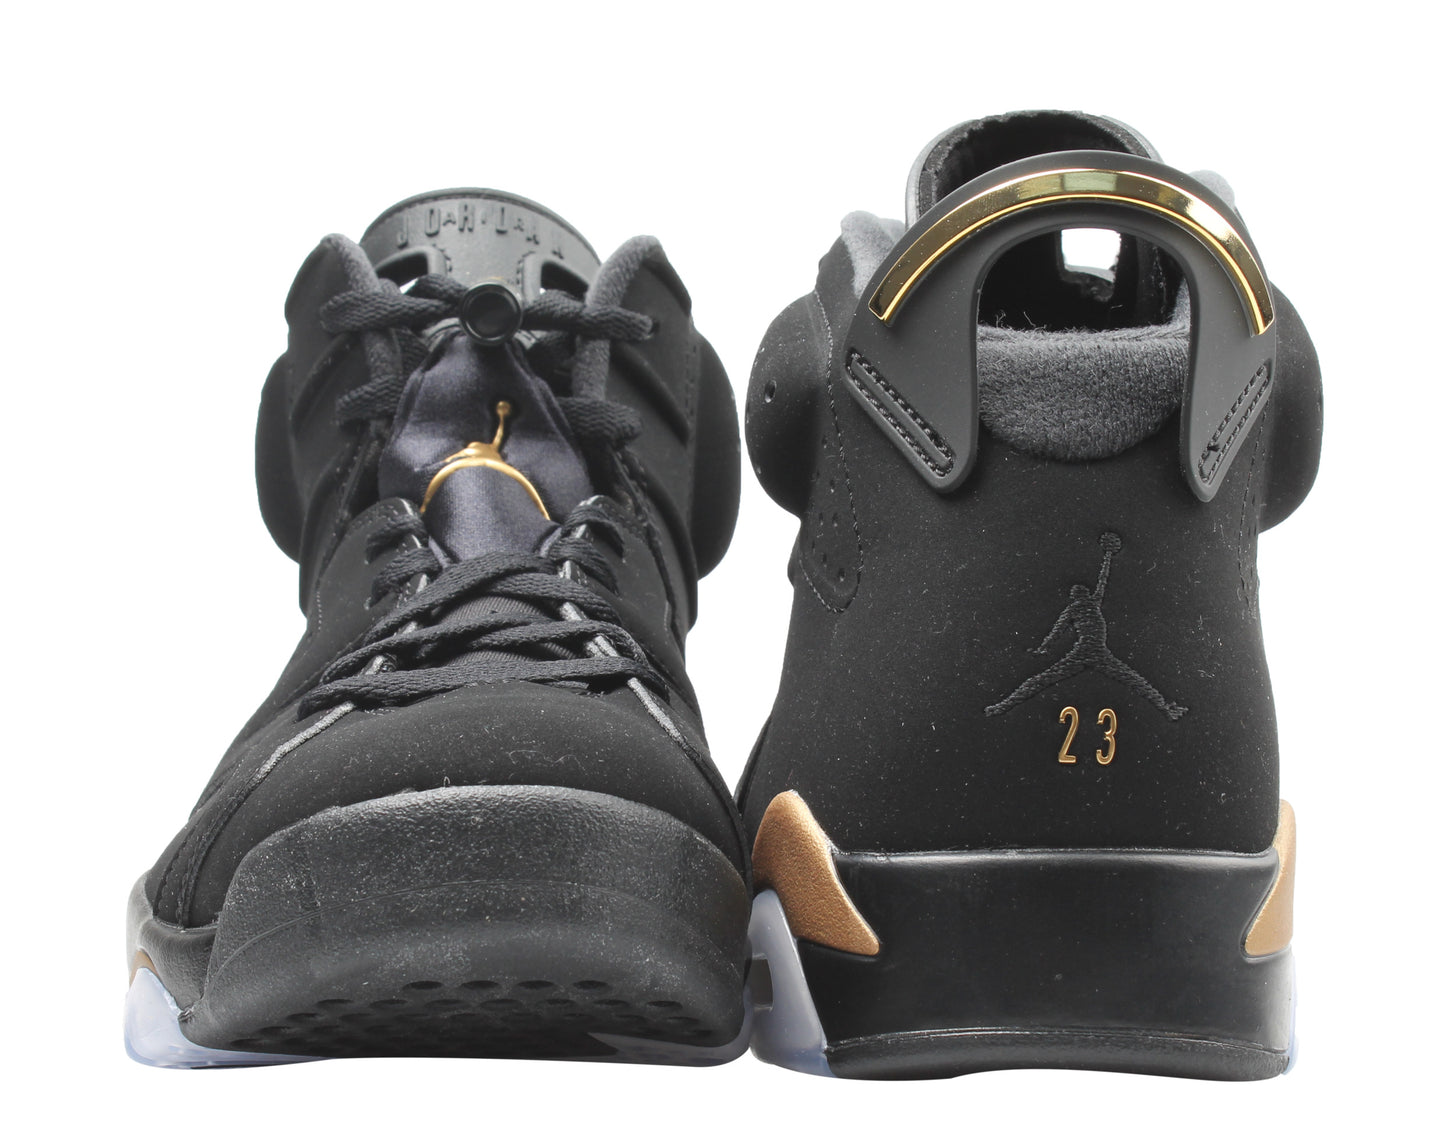 Nike Air Jordan 6 Retro DMP Black/Metallic Gold-Black Men's Basketball Shoes CT4954-007